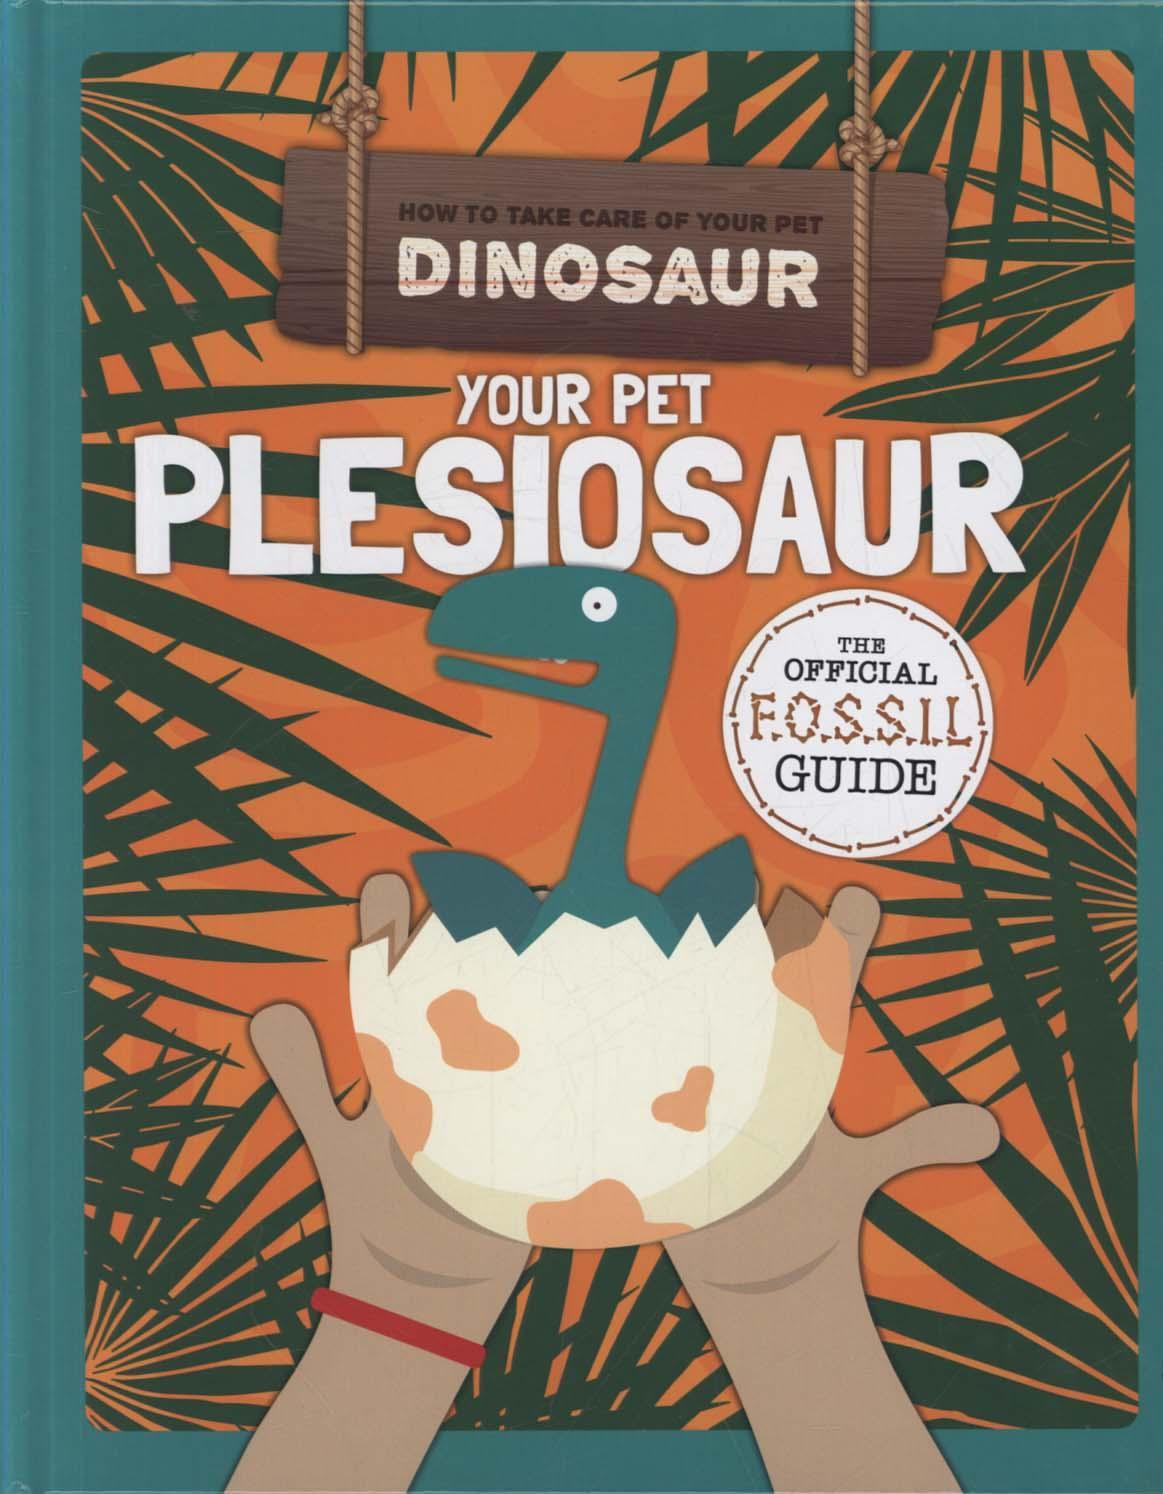 Your Pet Pleisiosaur